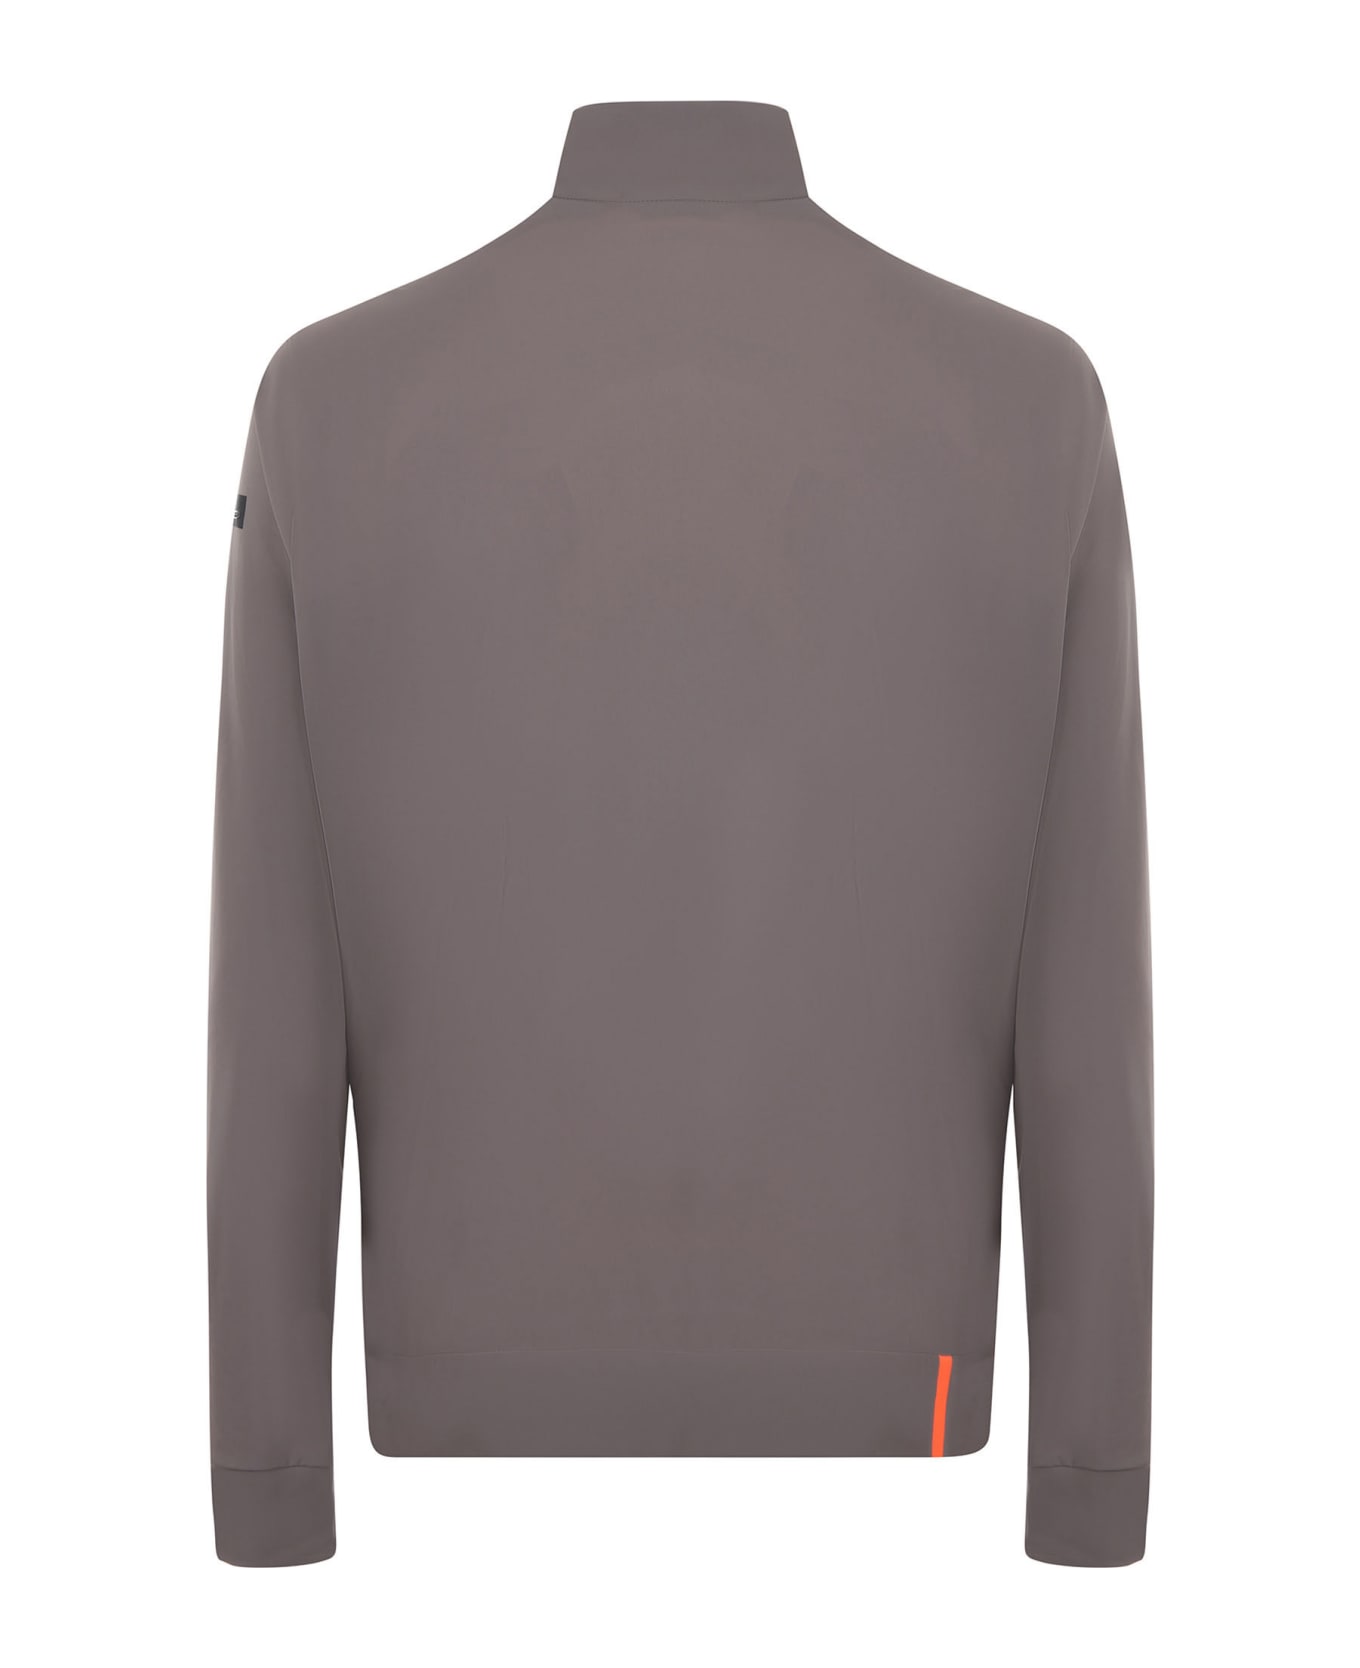 RRD - Roberto Ricci Design Rrd Sweatshirt - Tortora